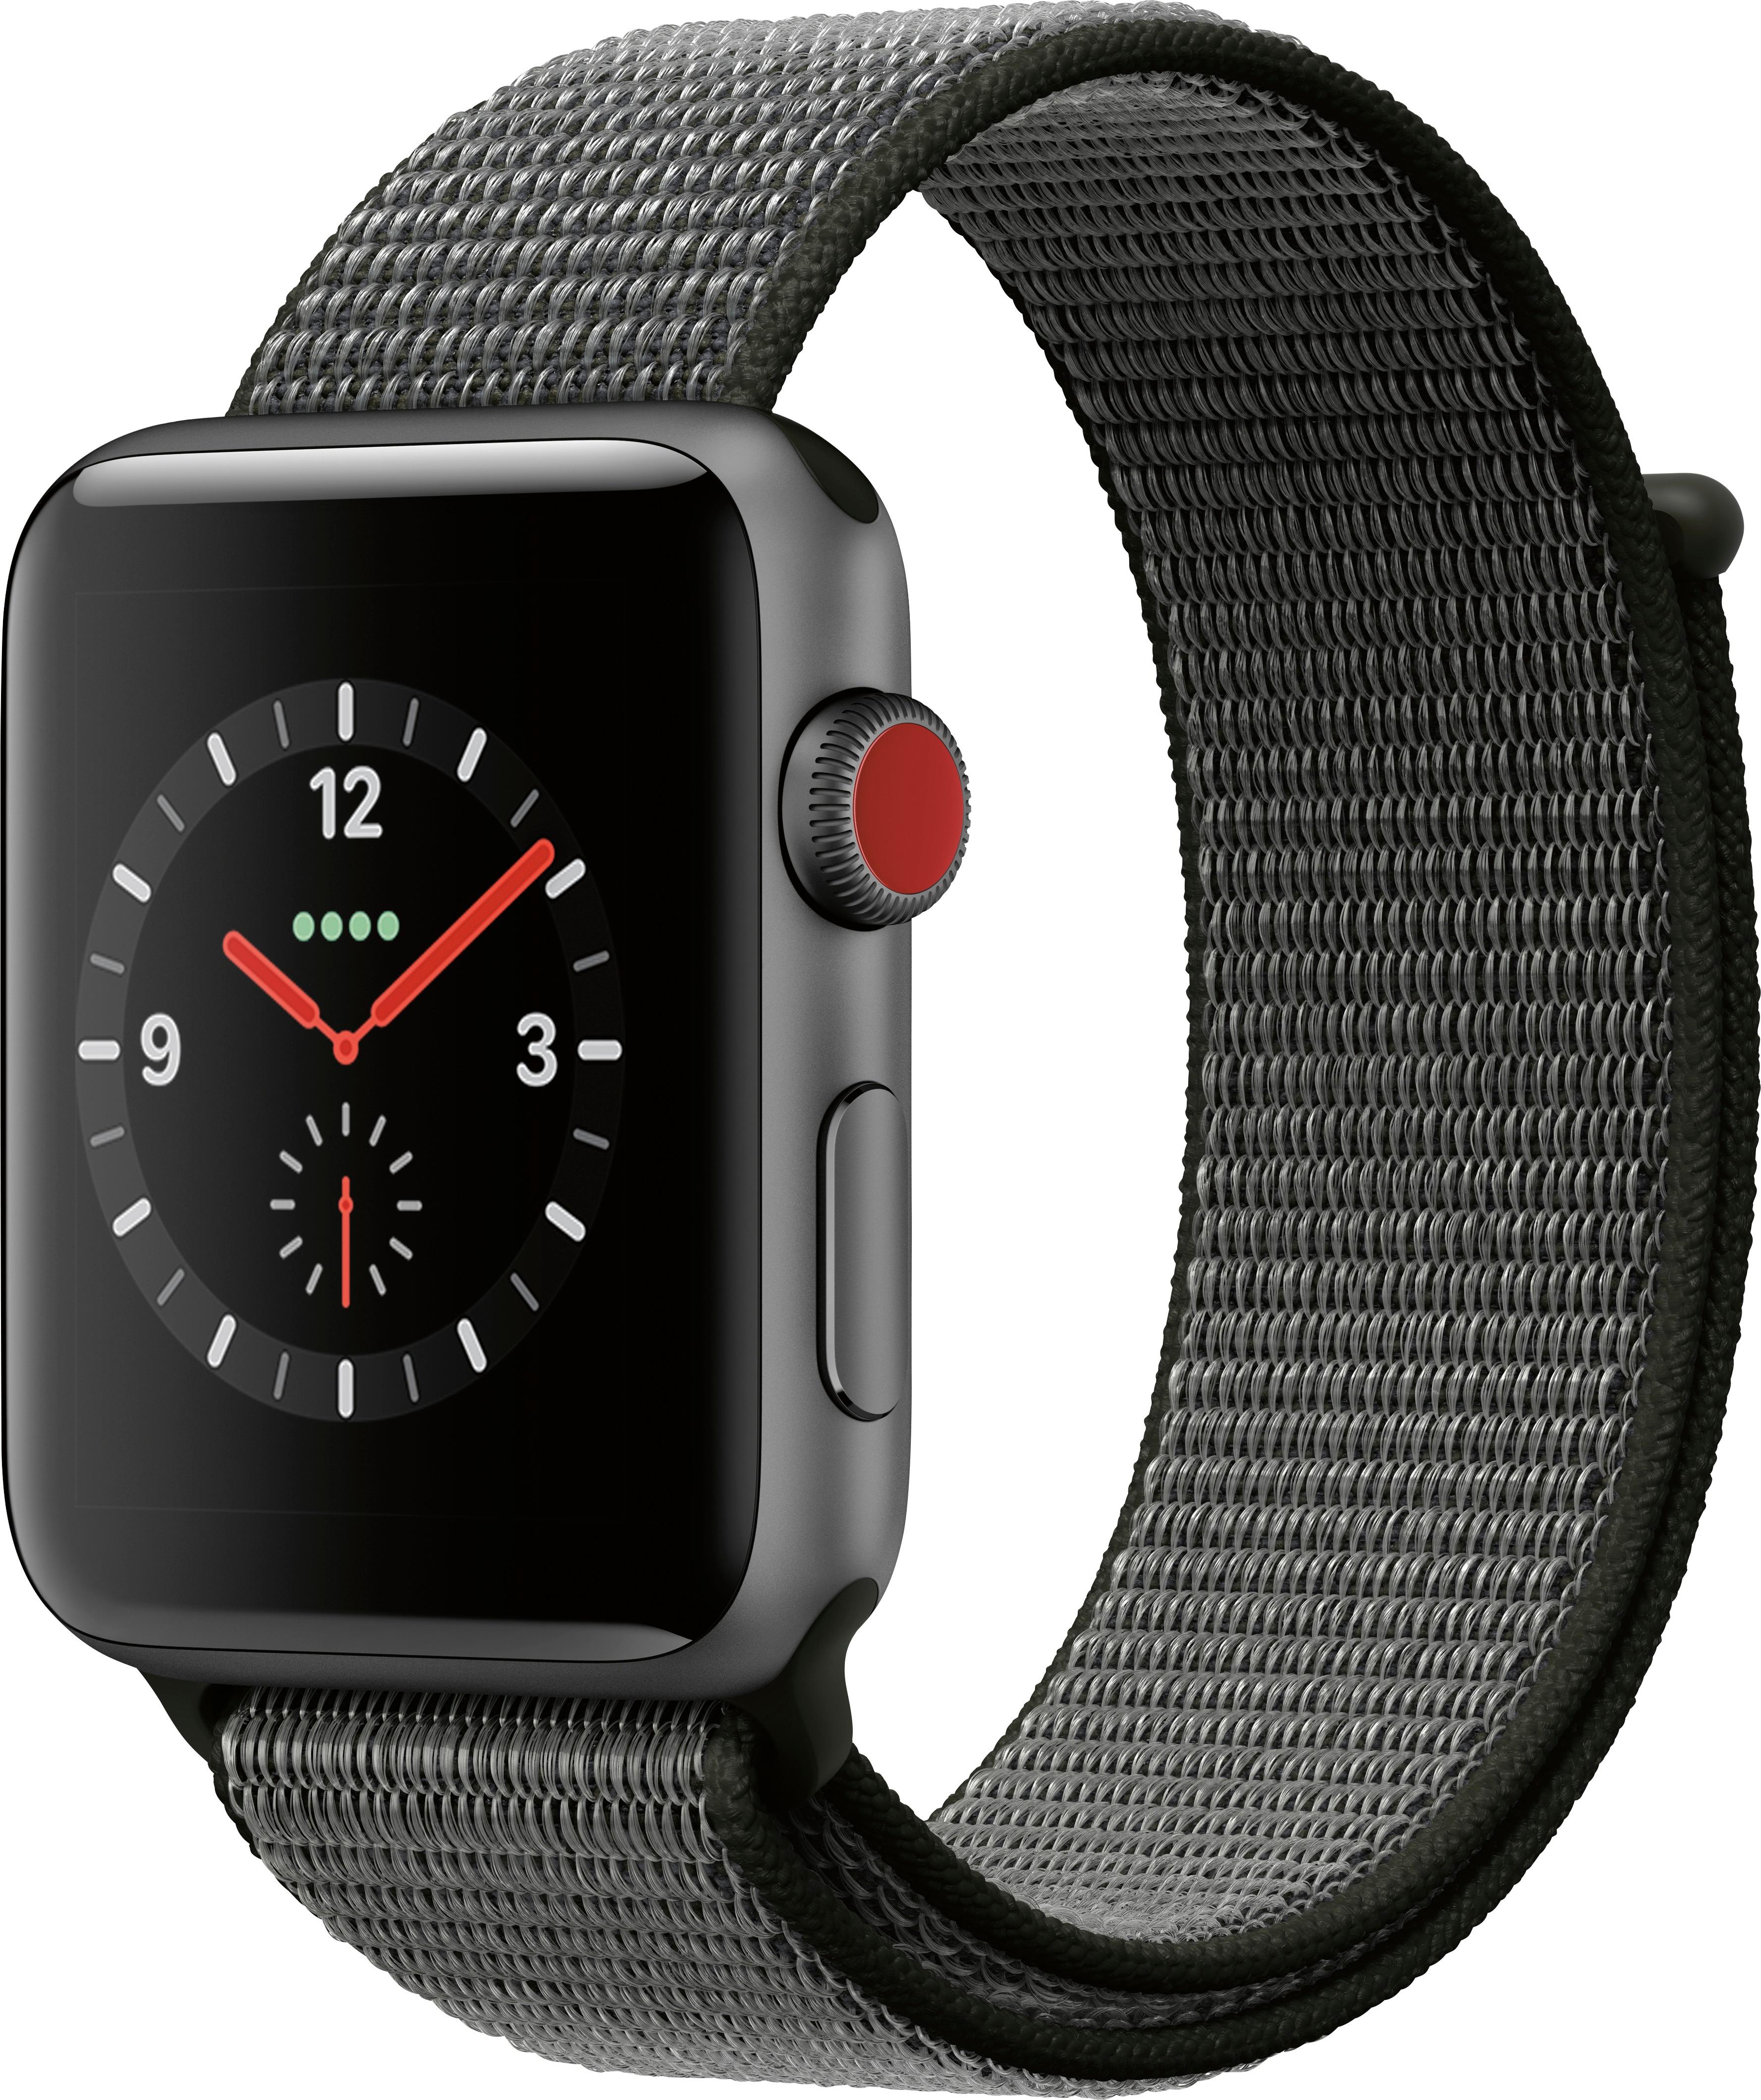 Apple Watch Series 3 (GPS + Cellular) 42mm Space Gray  - Best Buy